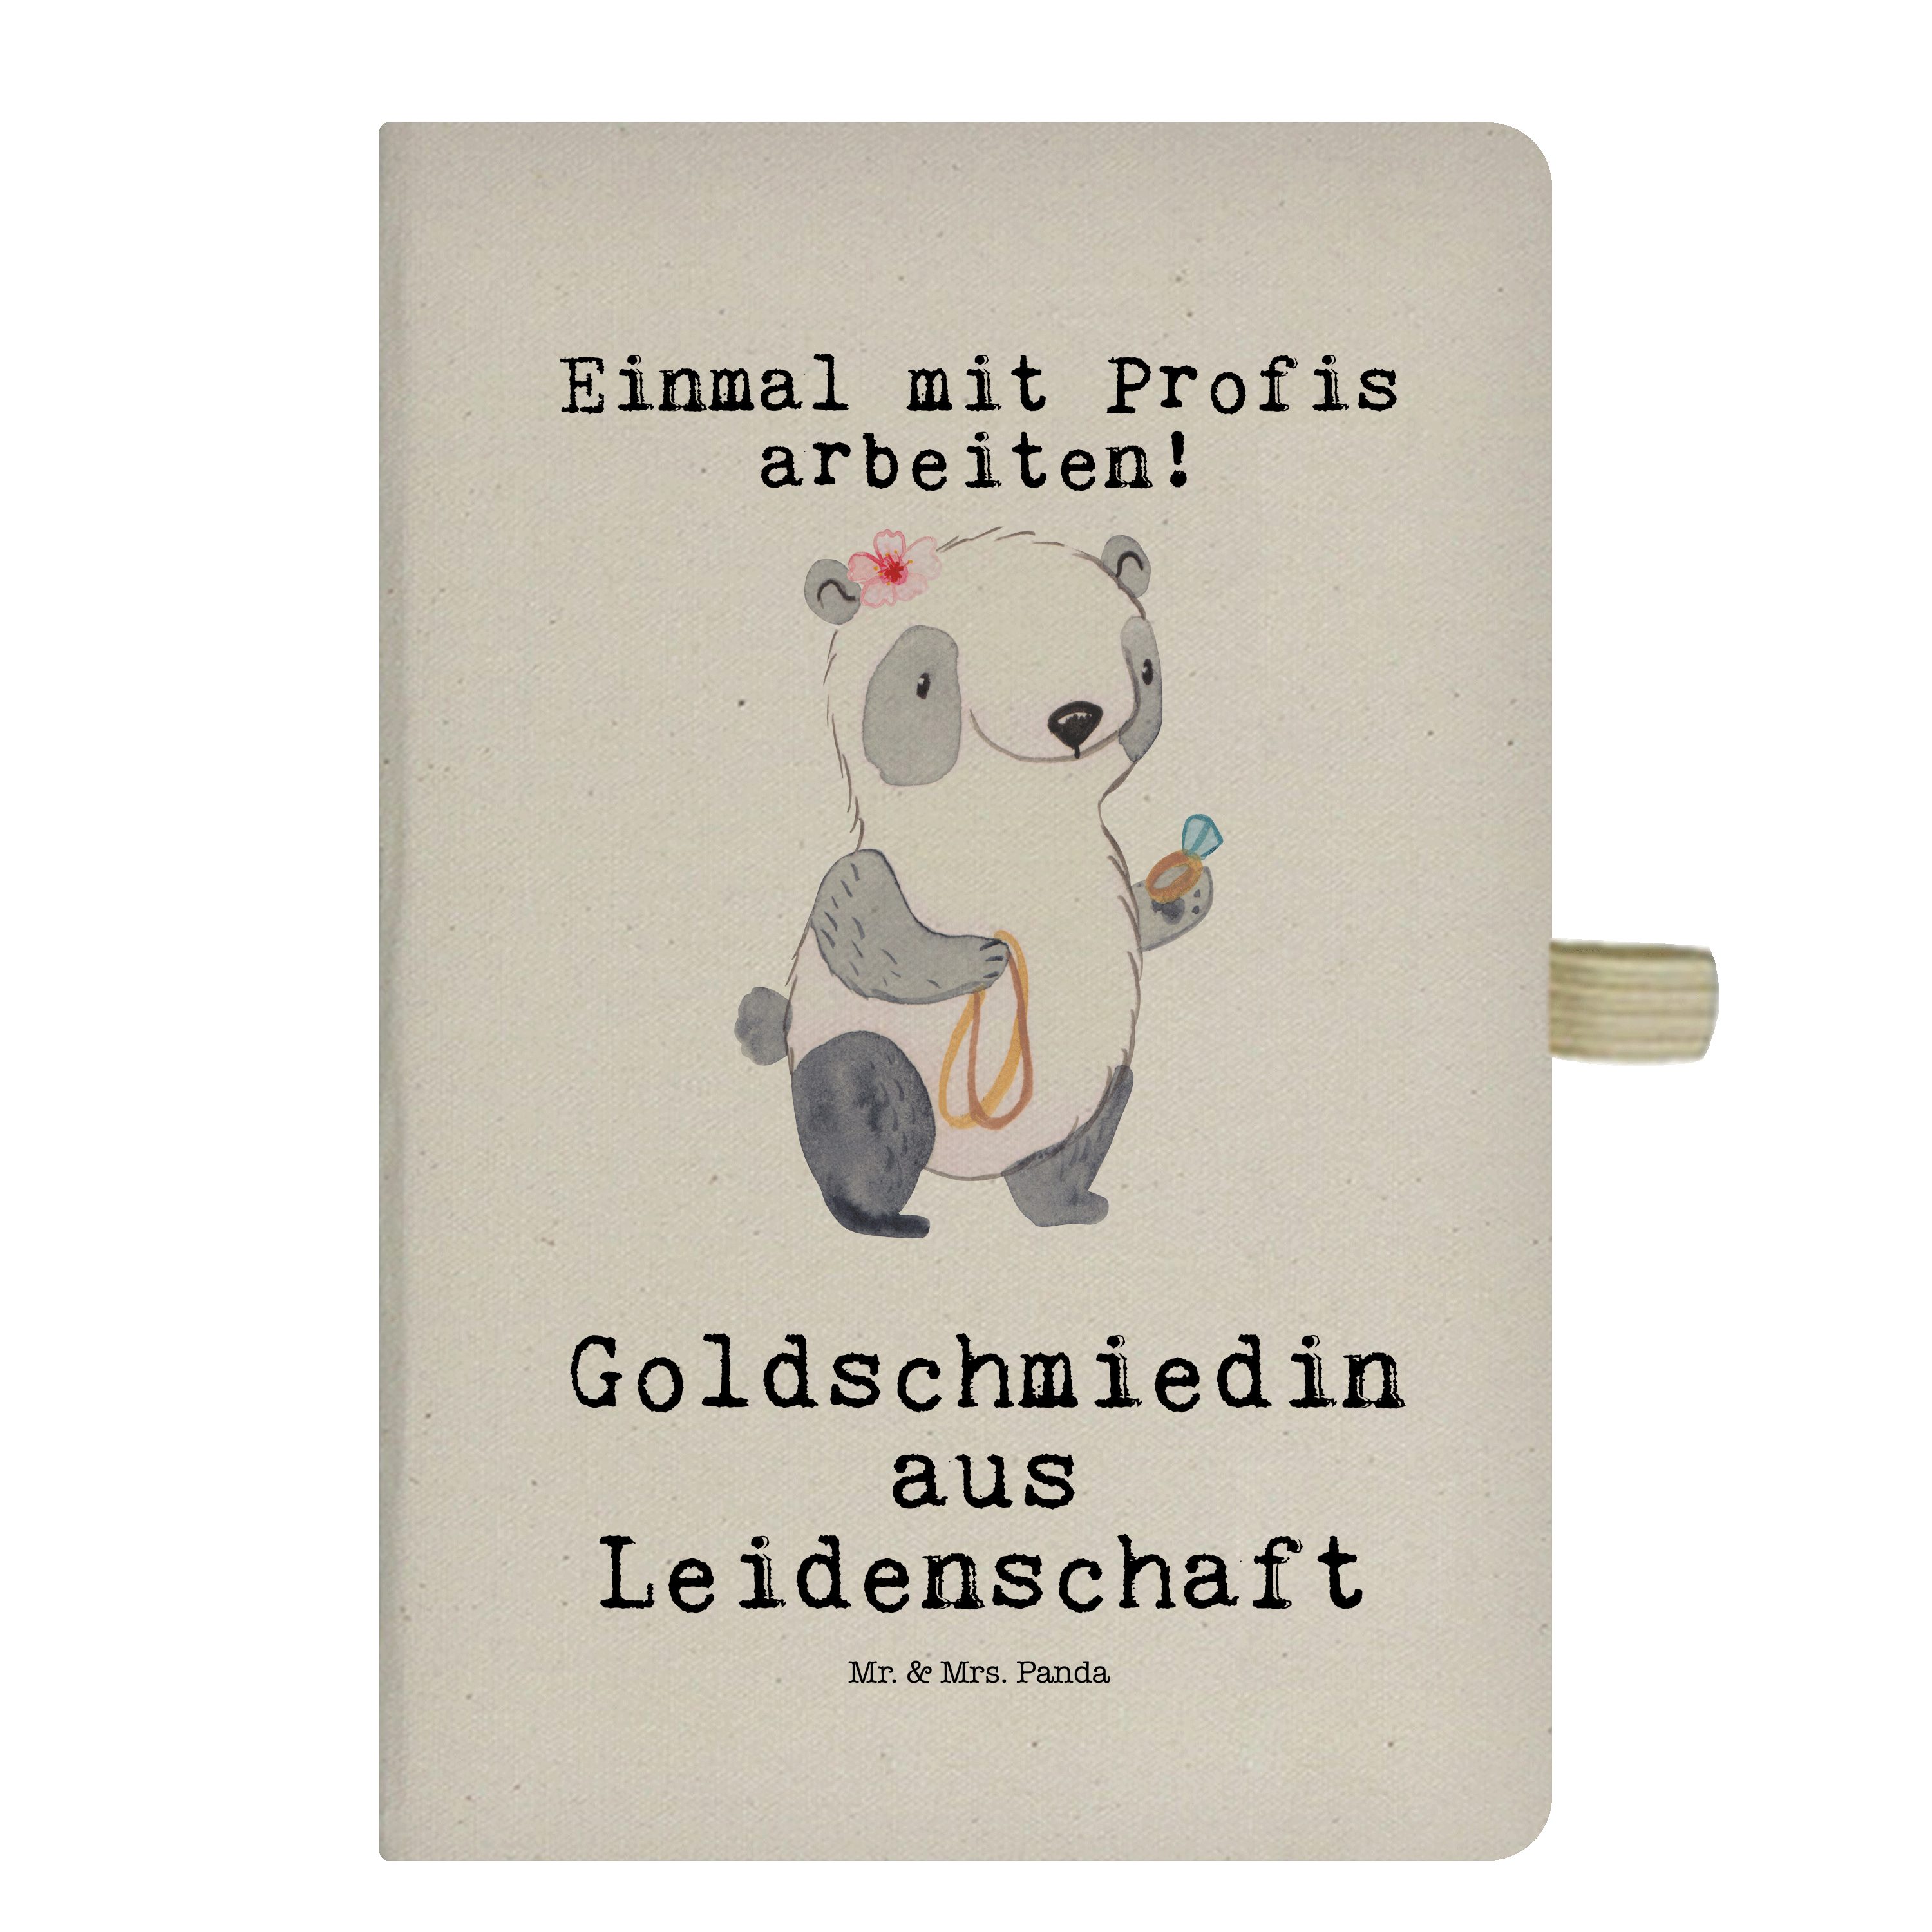 [Weiterhin beliebt] Mr. & Mrs. Panda Notizbuch - Panda Notizheft, Transparent Mrs. Leidenschaft J & Mr. Geschenk, aus Goldschmiedin 